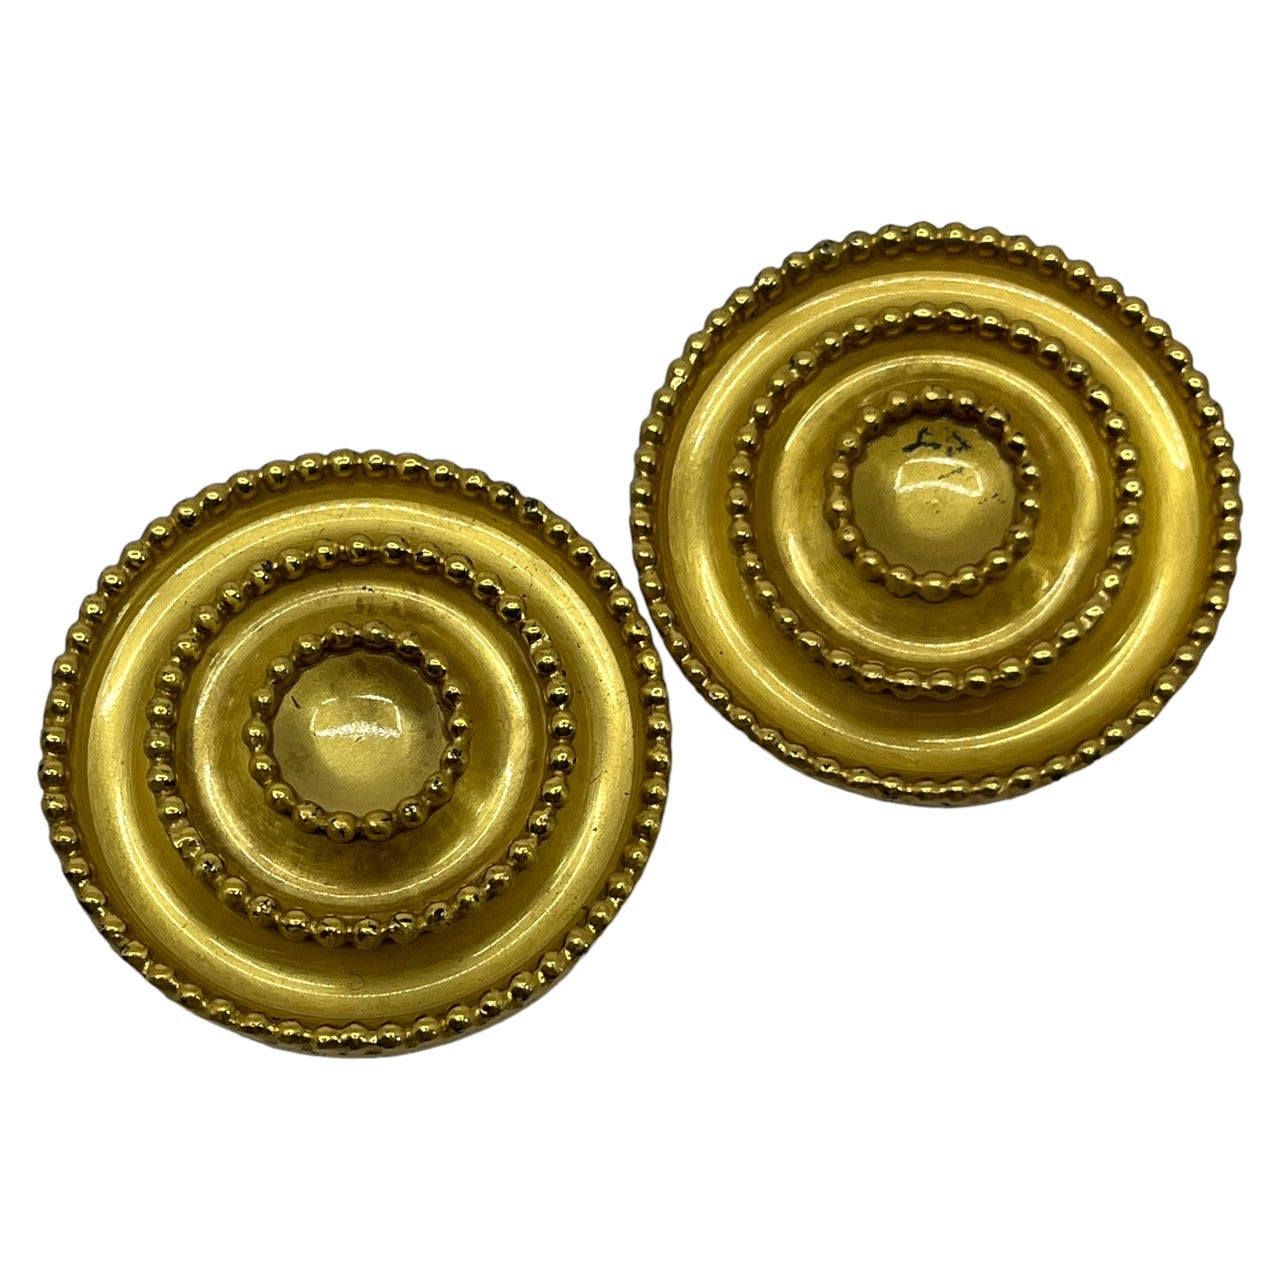 LOEWE(ロエベ) vintage circle gold earrings/ヴィンテージサークルゴールドイヤリング/丸/大ぶり ゴールド 刻印925